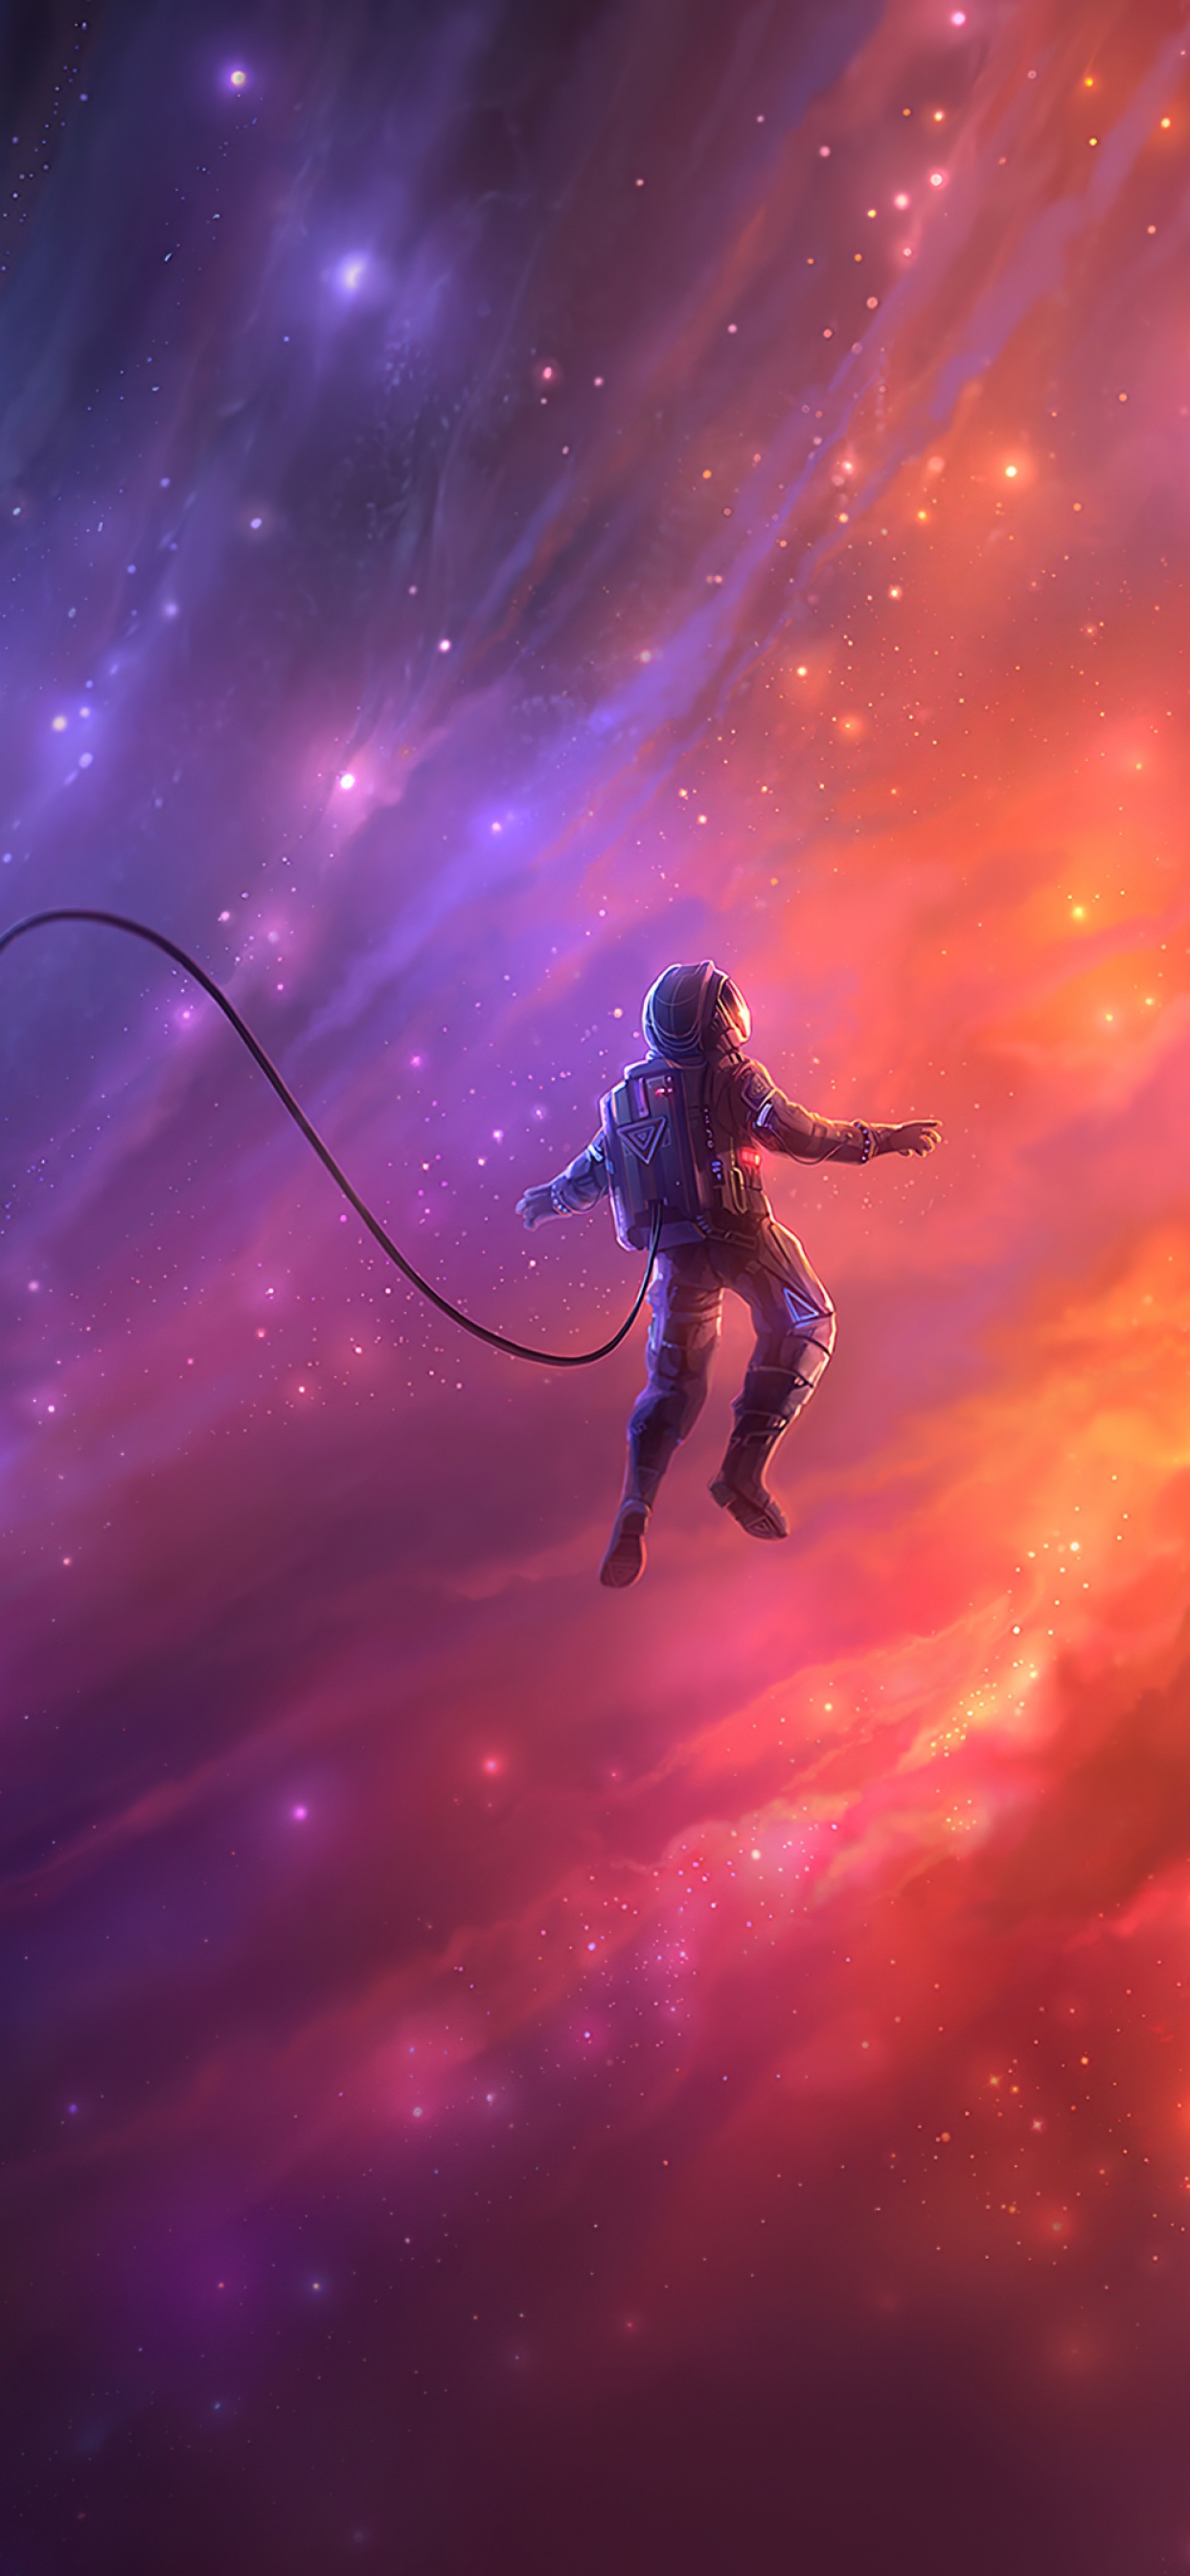 Space Wallpaper 4K, Astronaut, Dream, Fantasy